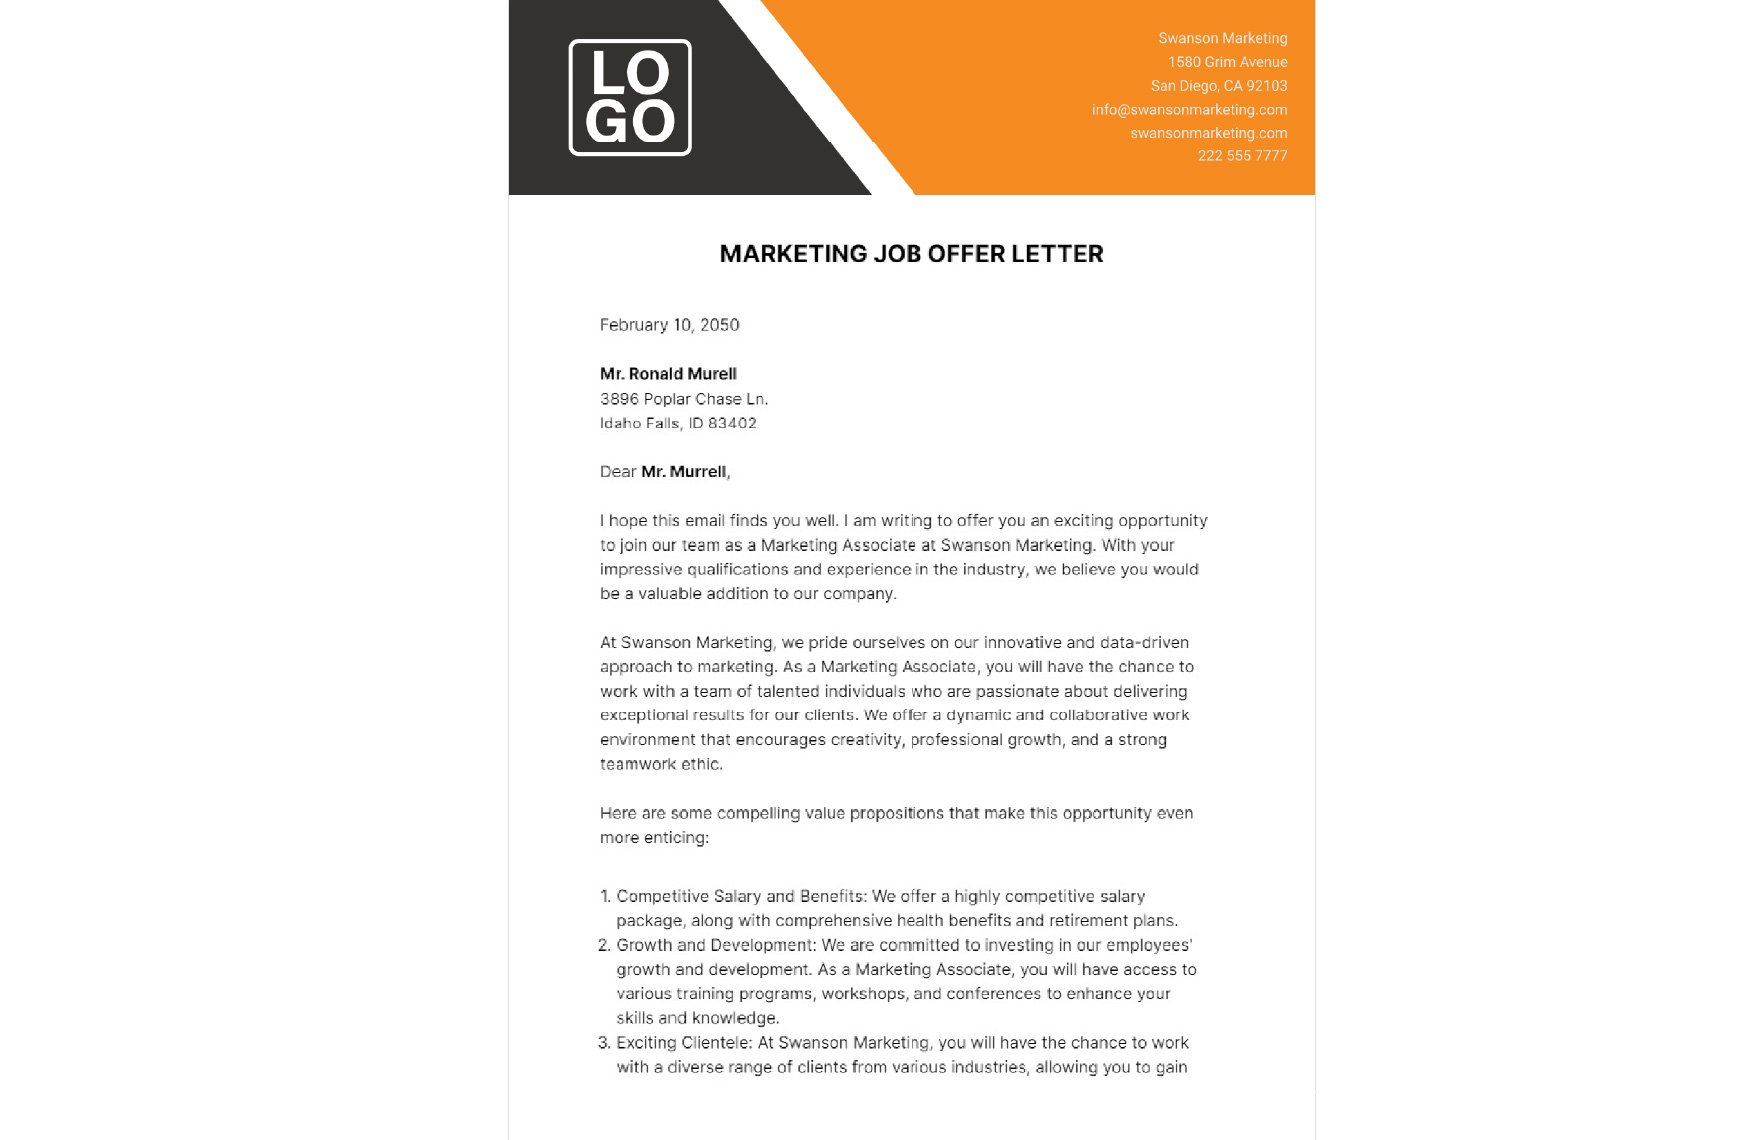 Marketing Job Offer Letter Template